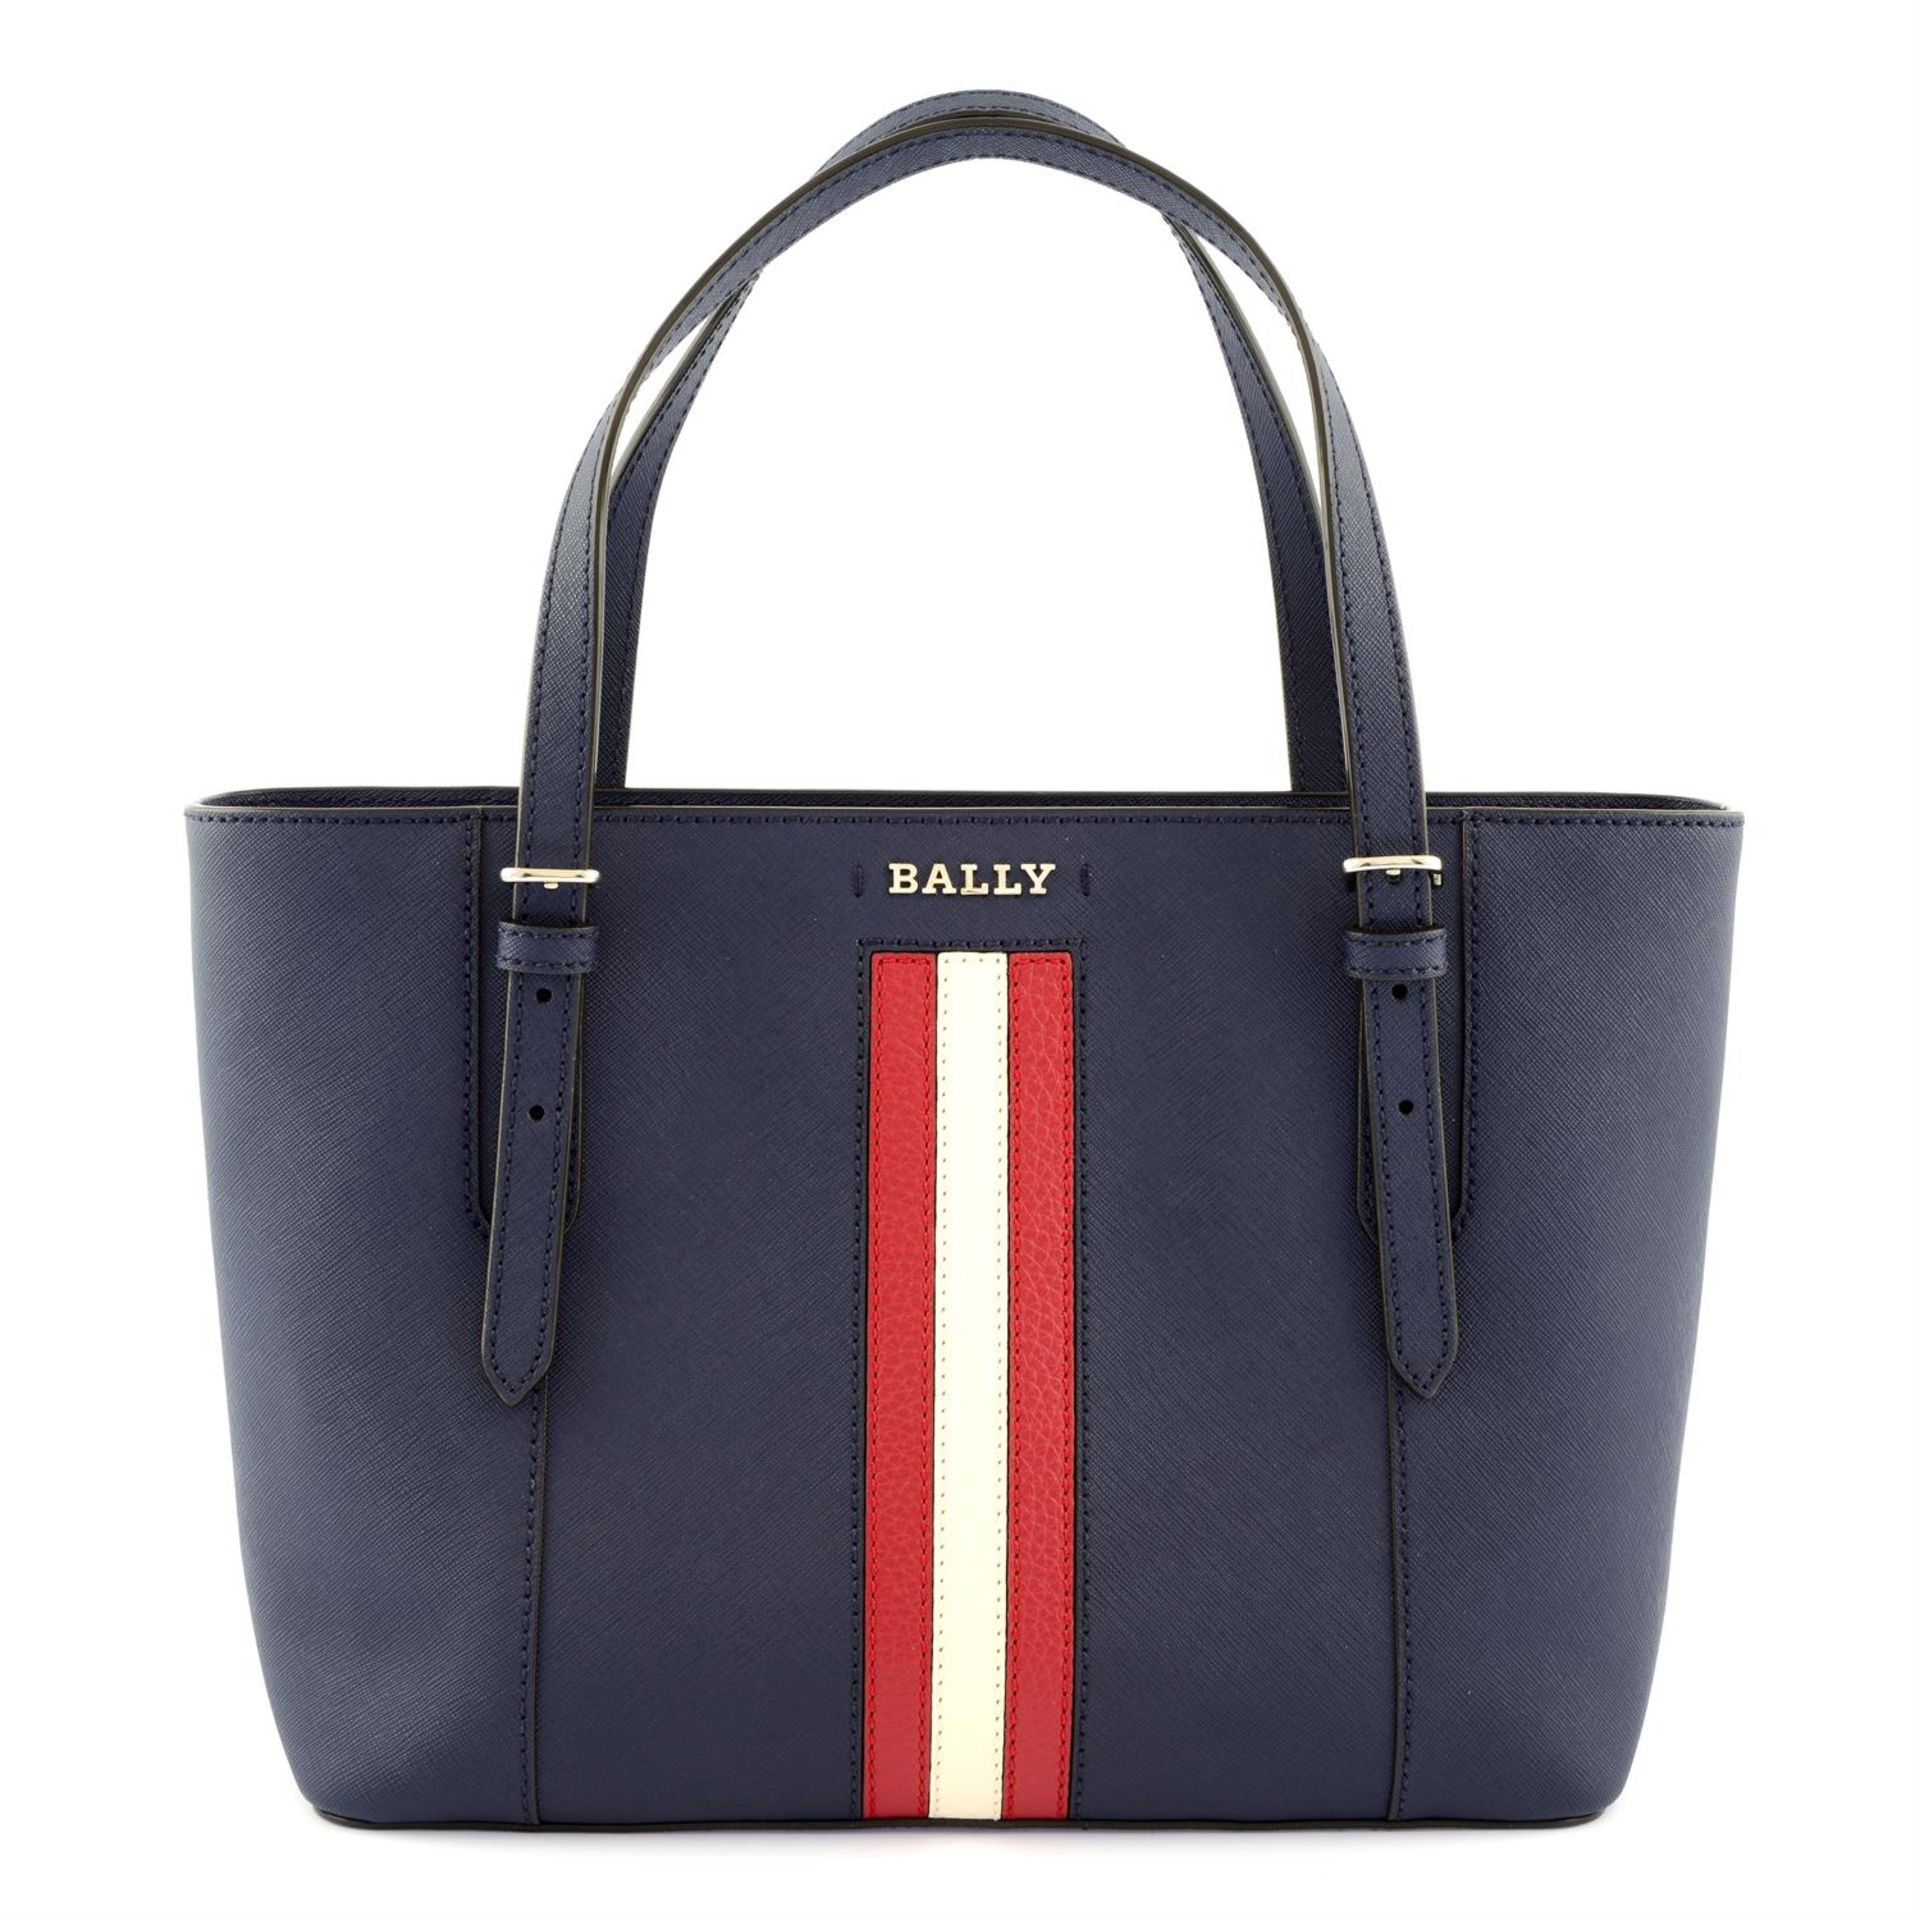 BALLY - a small navy Supra tote bag.